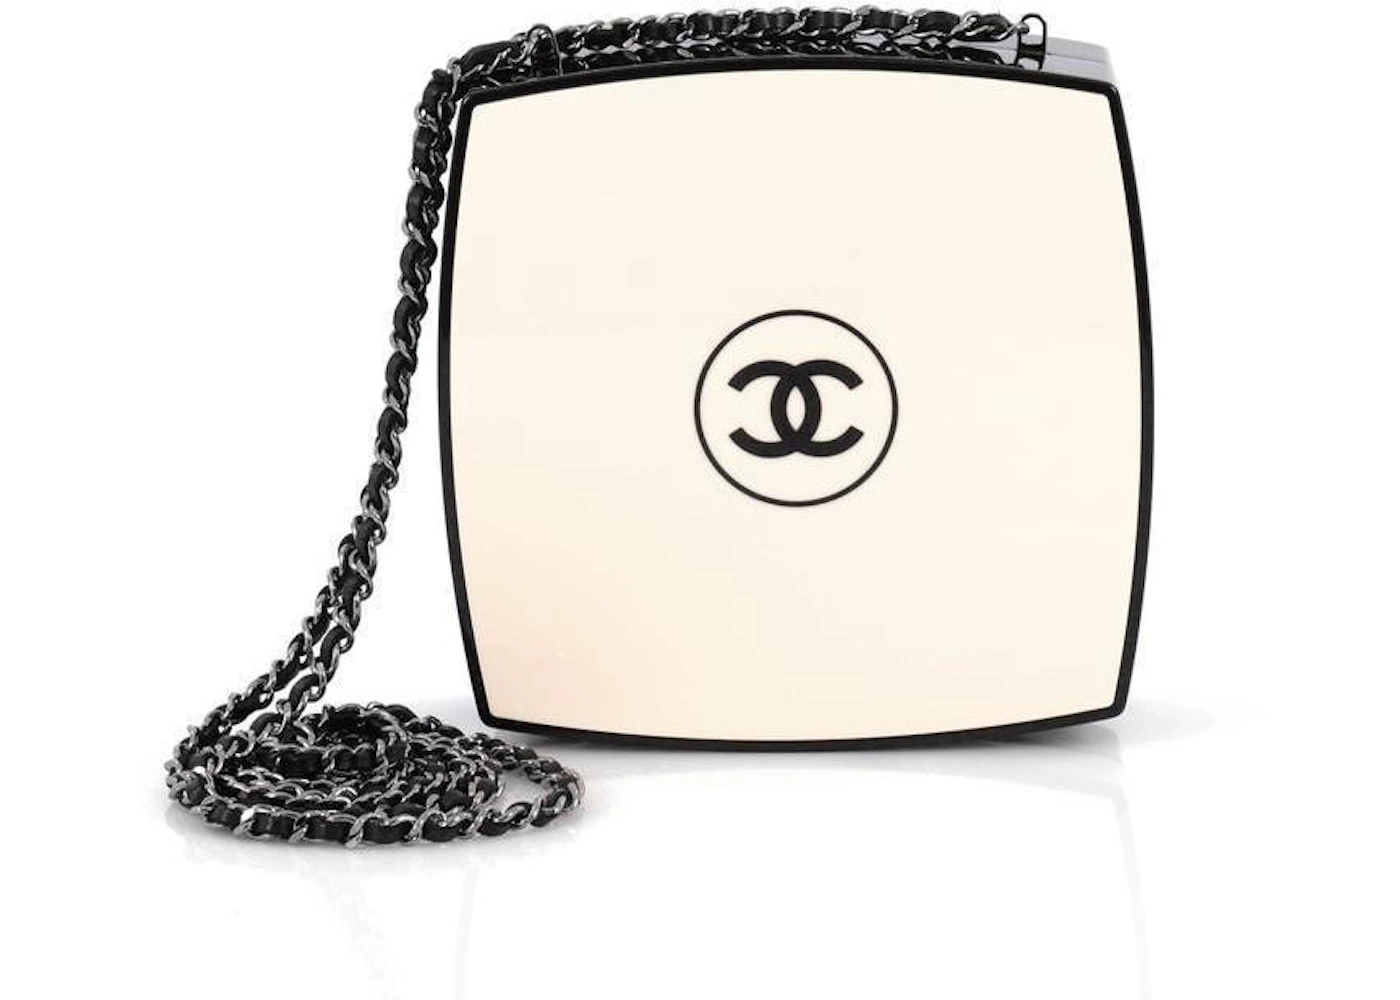 Chanel Outer Pockets Shoulder Bags